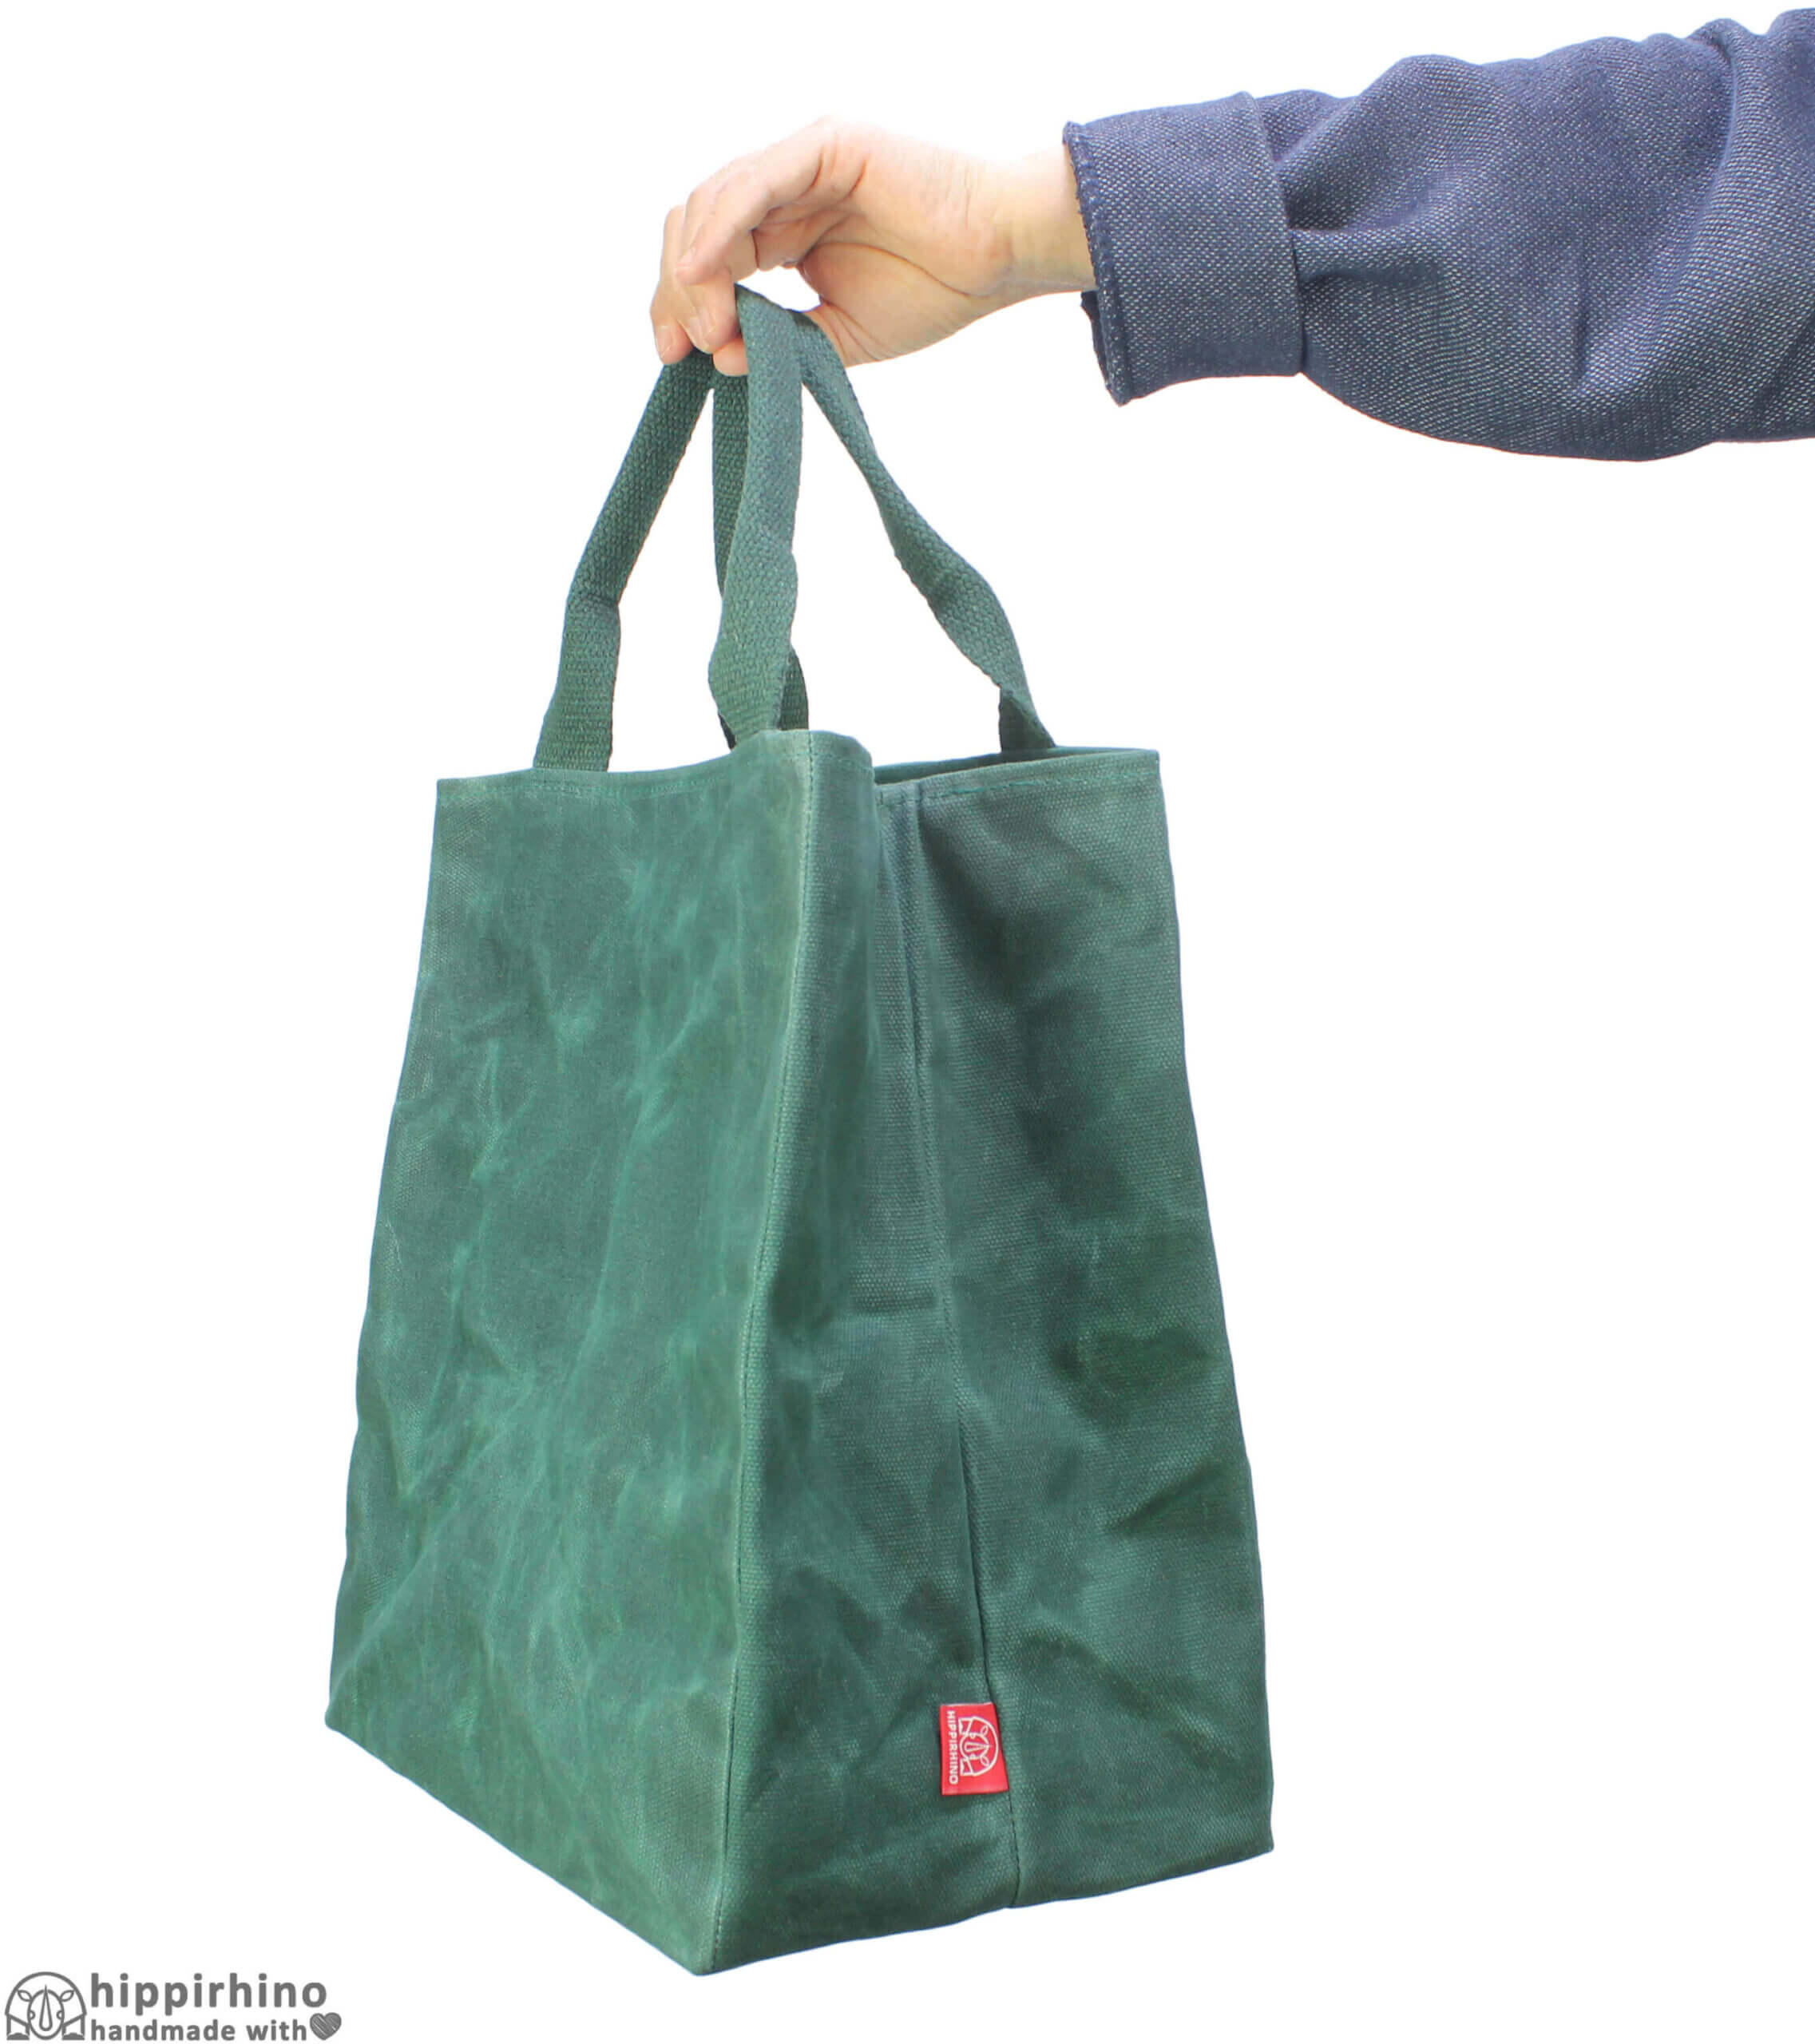 Short Handle Tote Top Handle Bag Cotton Bag Eco Bag 